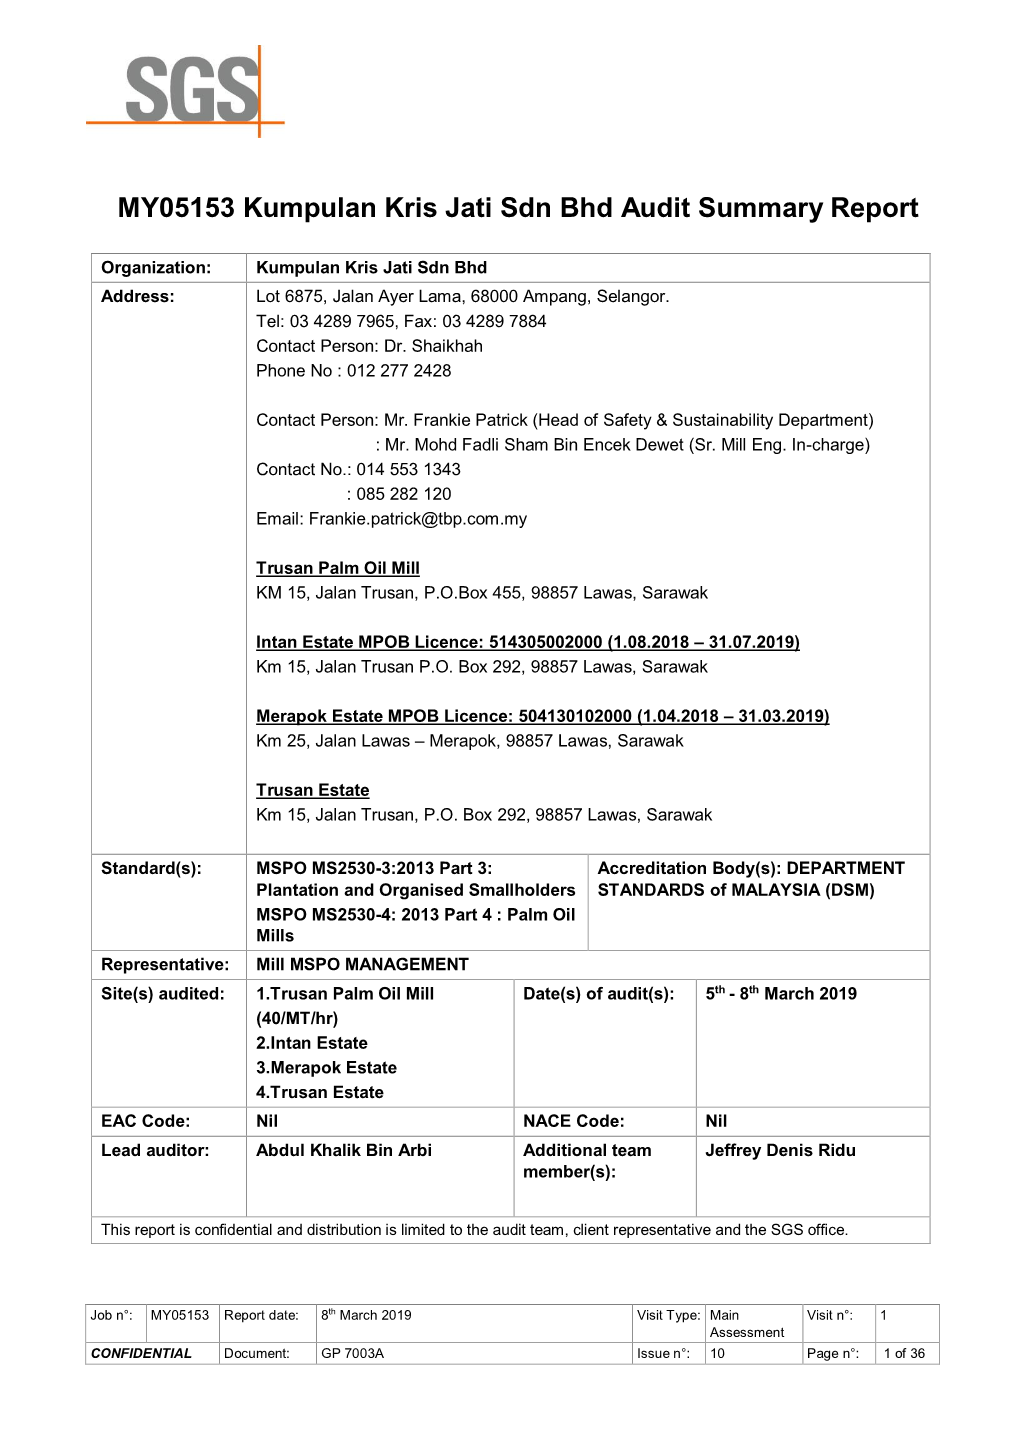 MY05153 Kumpulan Kris Jati Sdn Bhd Audit Summary Report